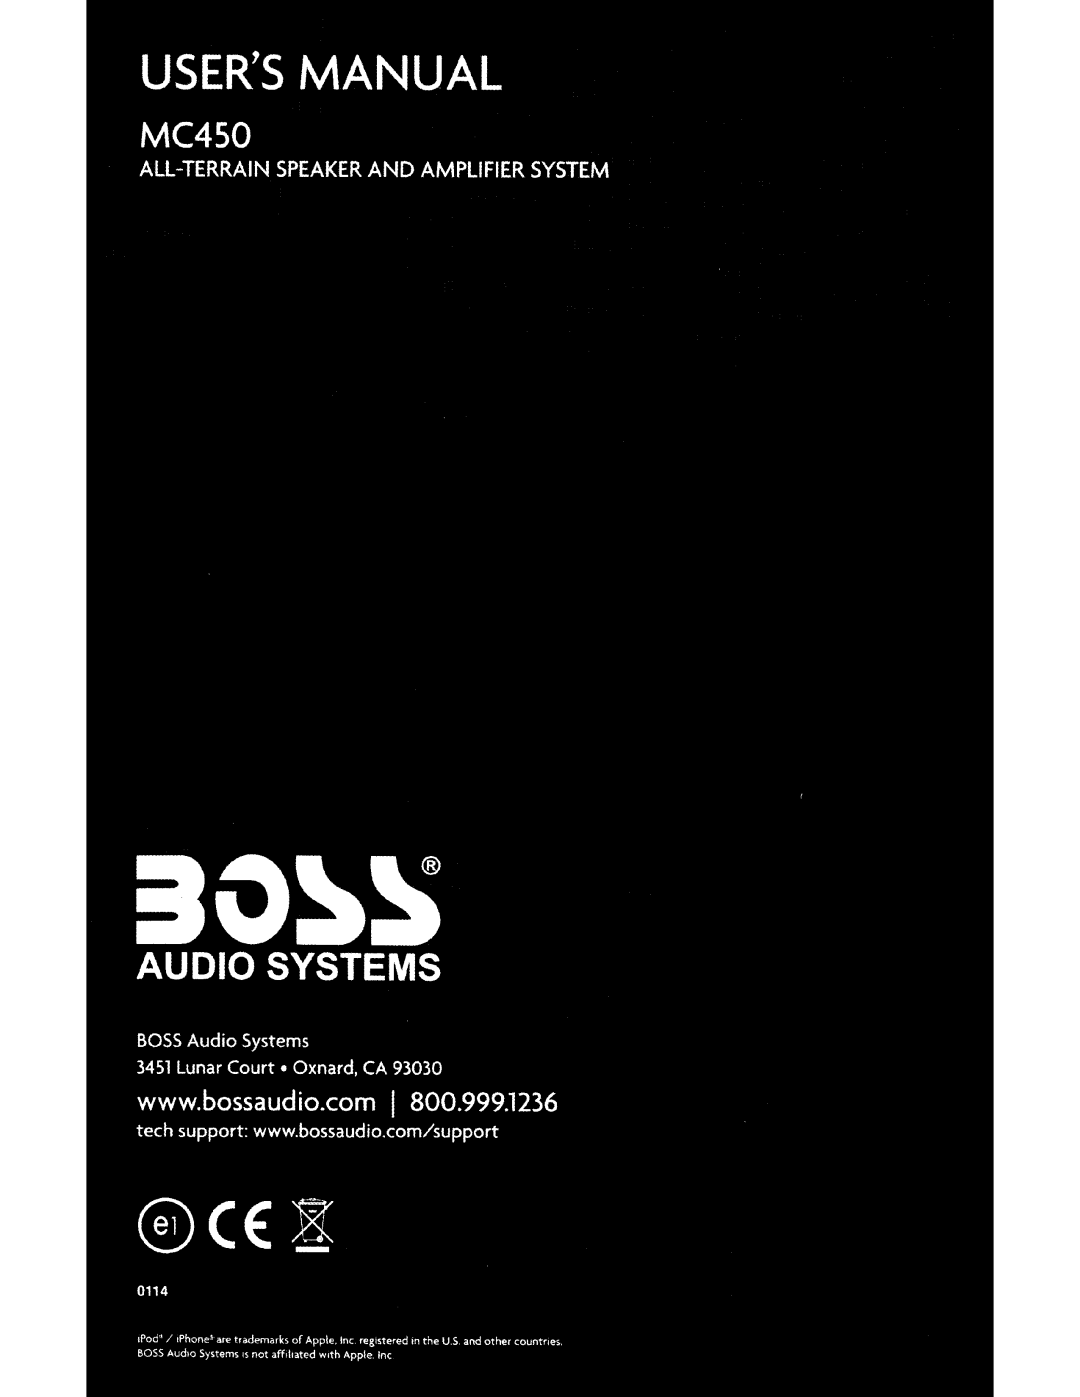 Boss Audio Systems MC450 user manual 